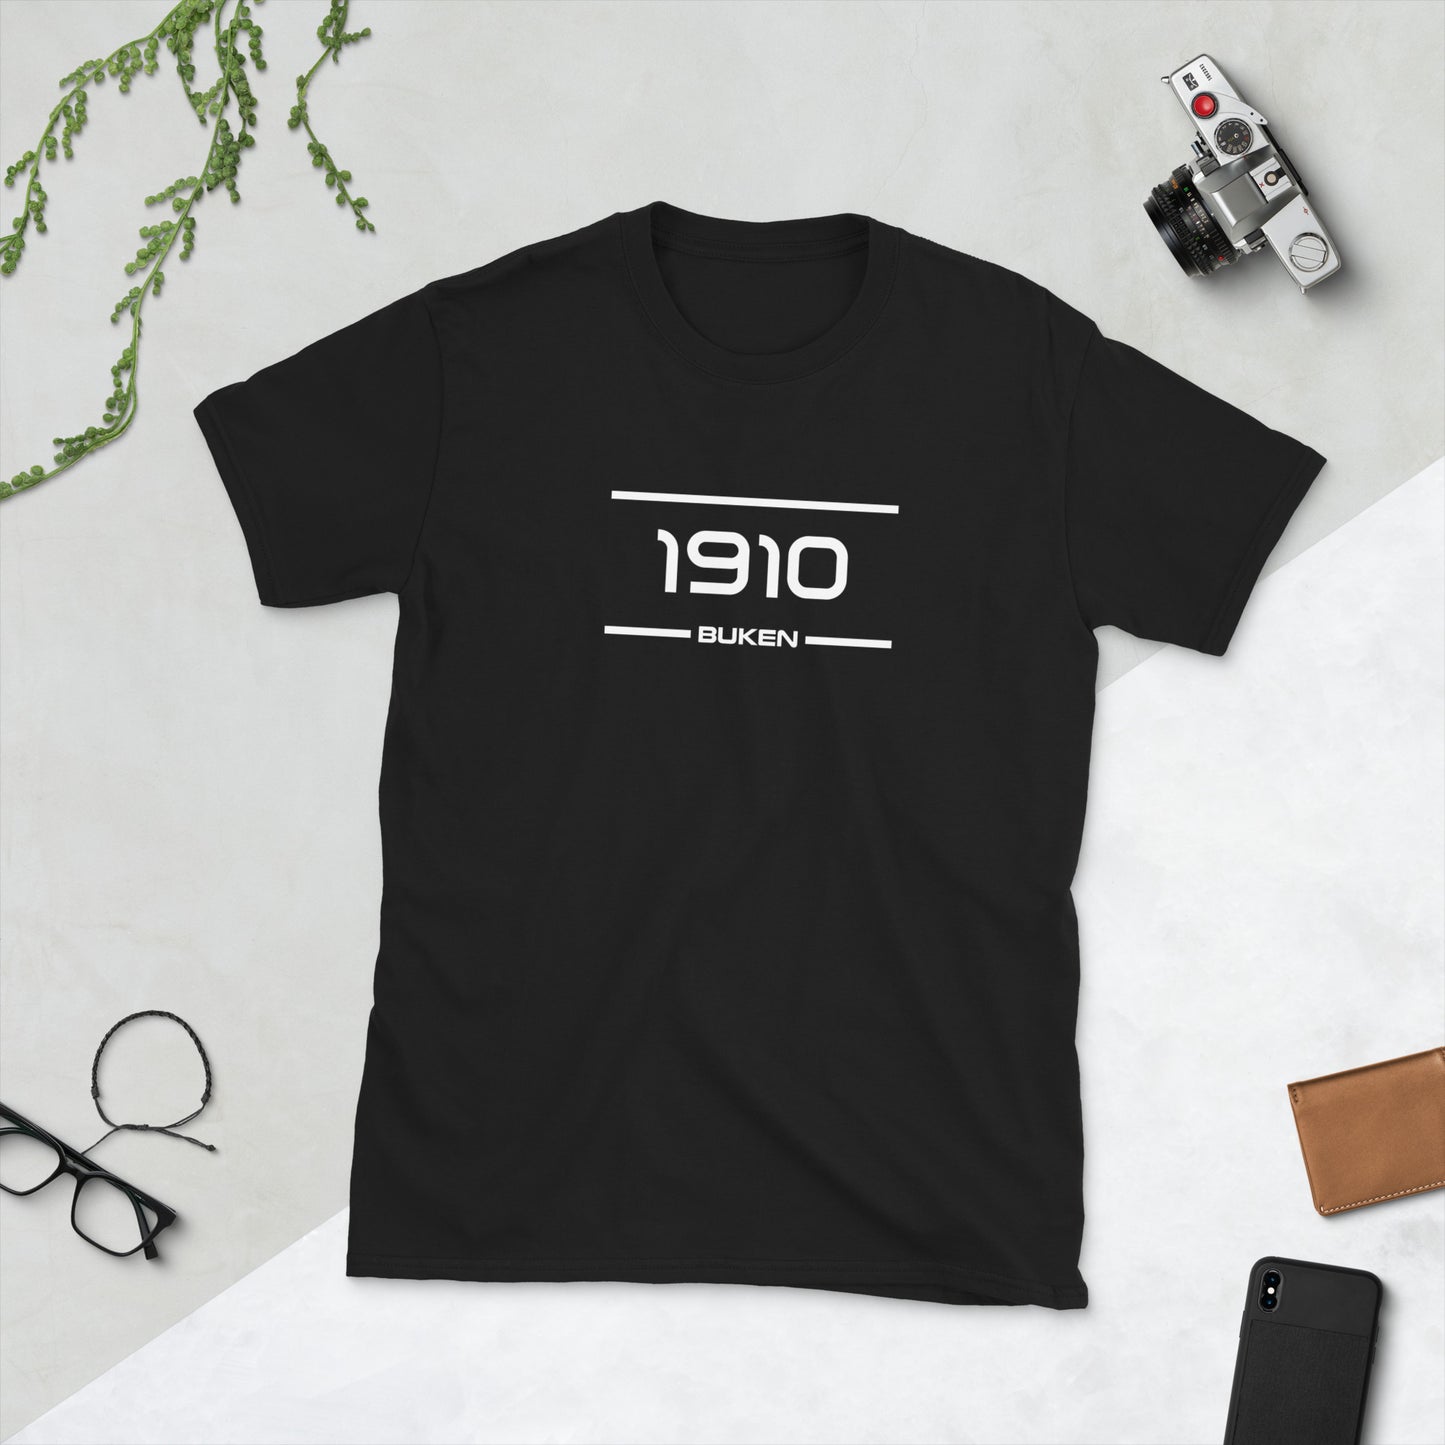 Tshirt - 1910 - Buken